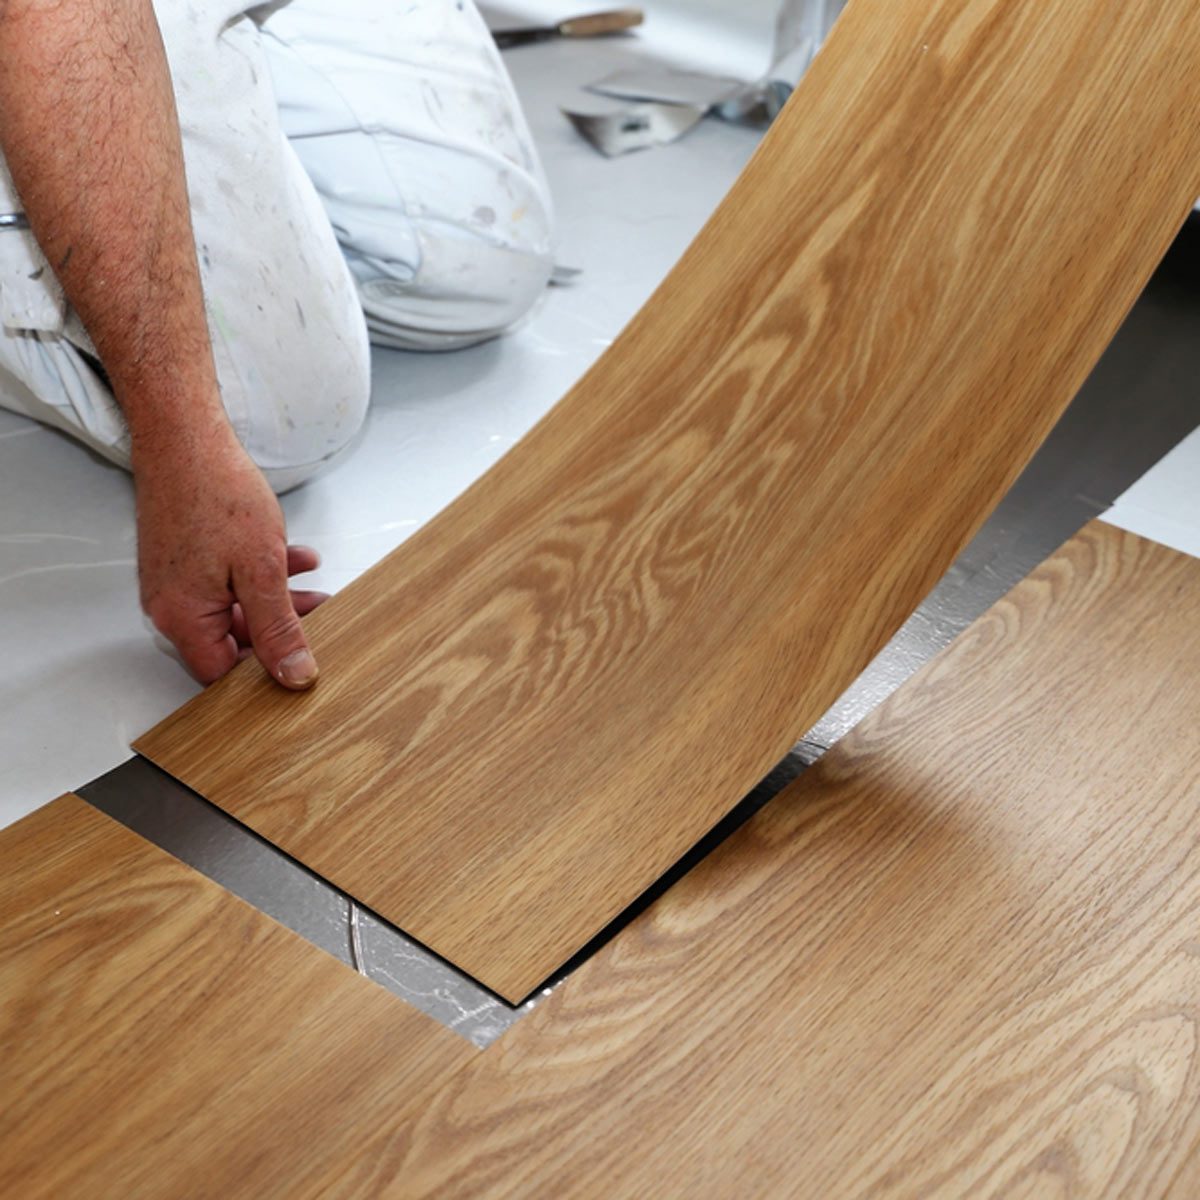 Inexpensive Flooring Options Cheap Flooring Ideas Instead Of